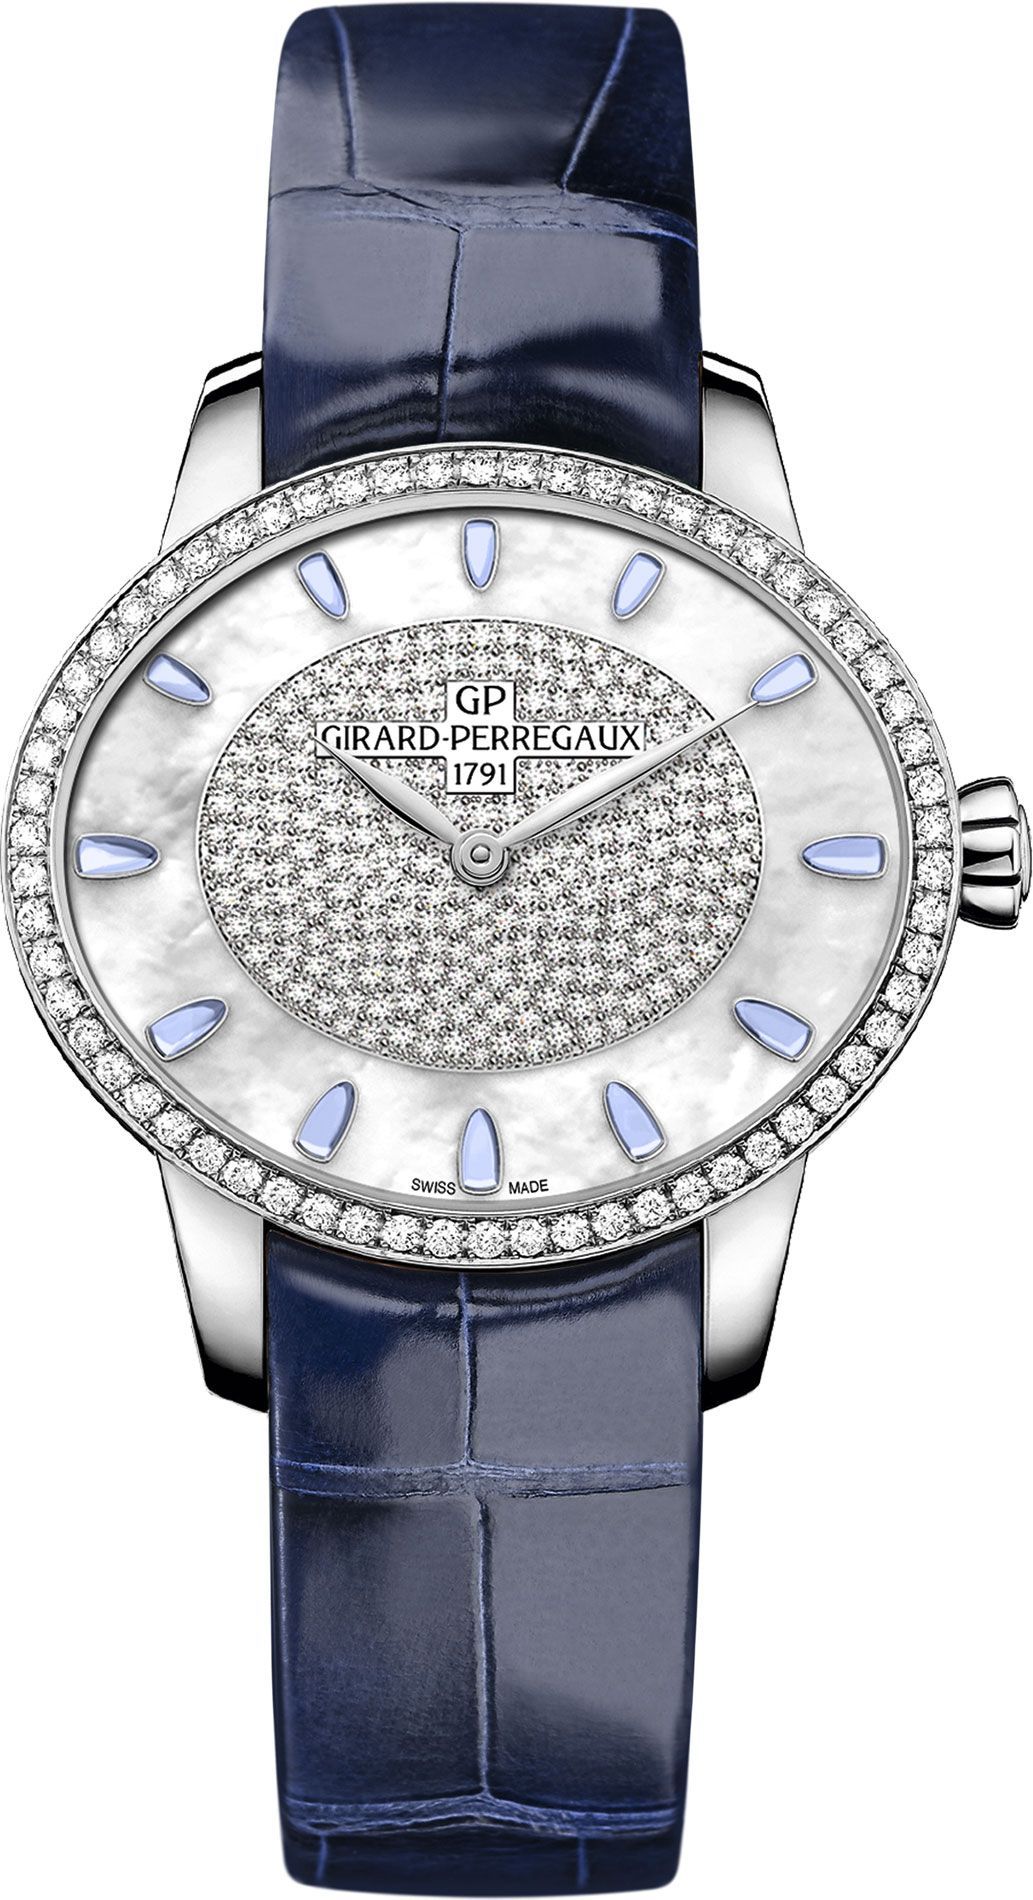 Girard-Perregaux High Jewellery 30.40 mm Watch in MOP Dial For Women - 1